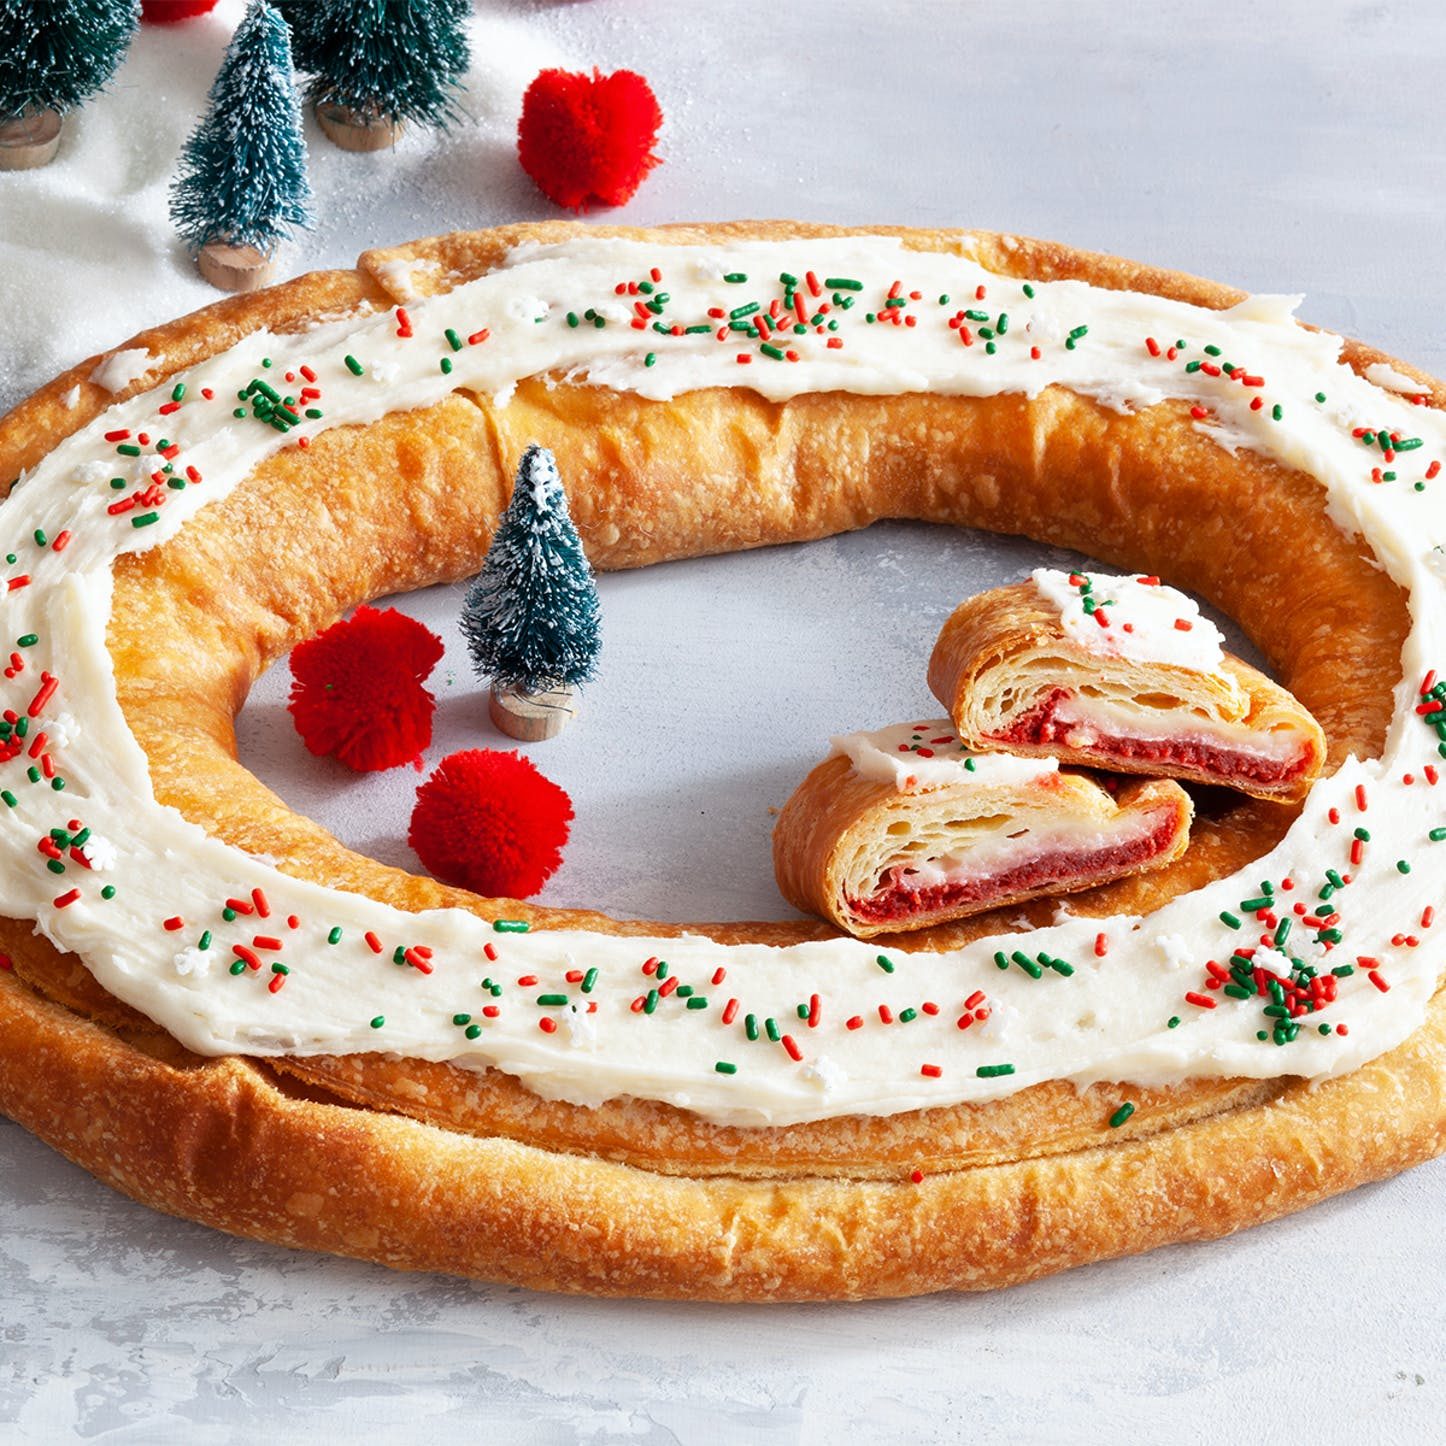 https://www.tasteofhome.com/wp-content/uploads/2021/12/OH-Danish-Bakery-Santas-Secret-Christmas-Kringle-ecomm-via-goldbelly.com_.jpg?fit=700%2C700